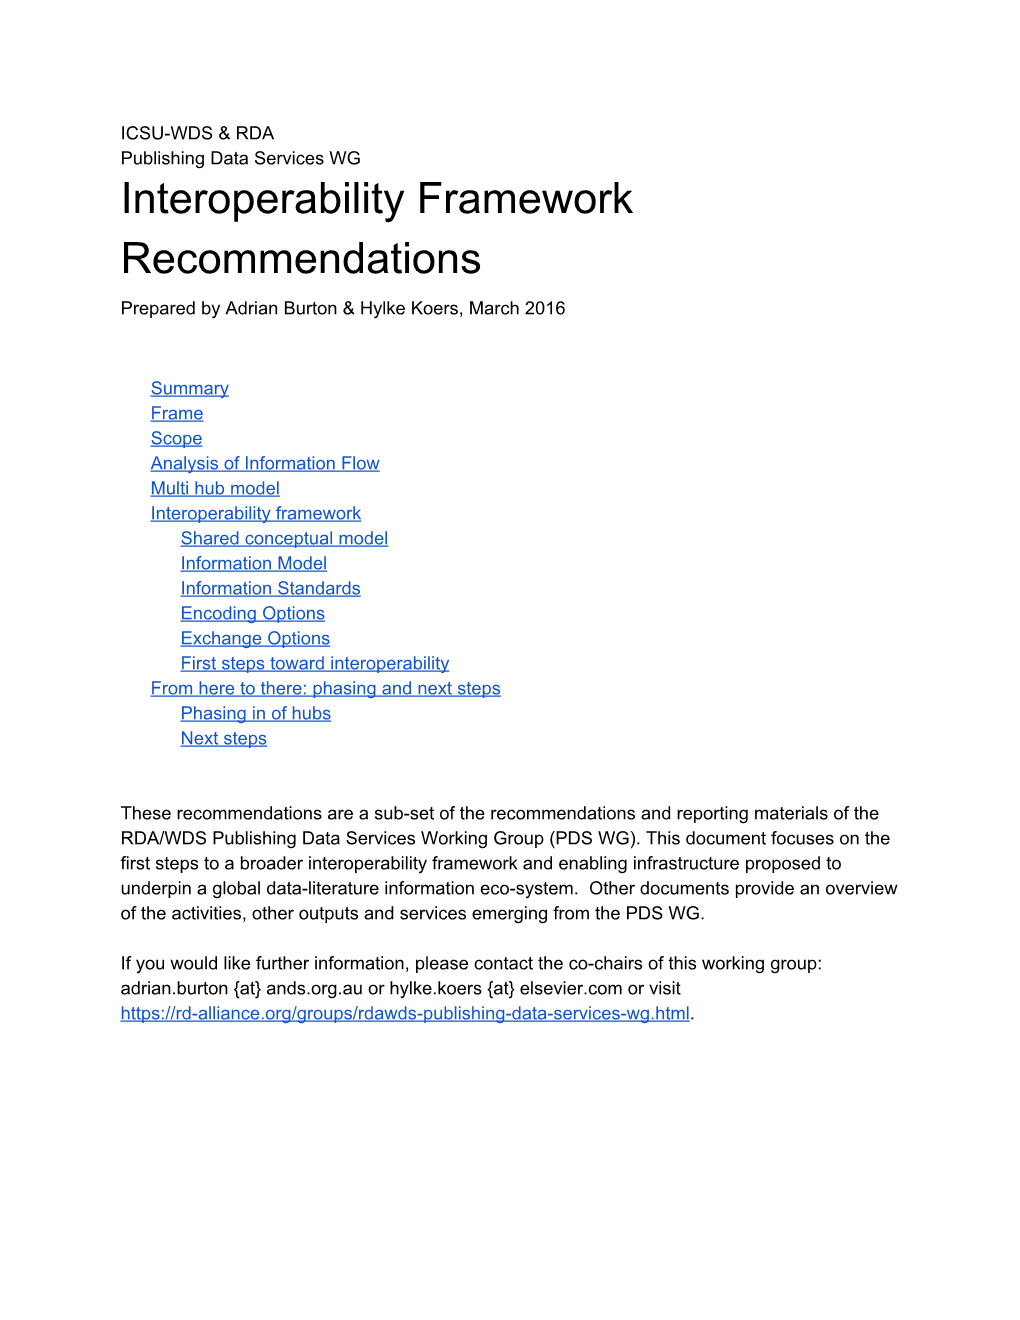 Interoperability Framework Recommendations Prepared by Adrian Burton & Hylke Koers, March 2016